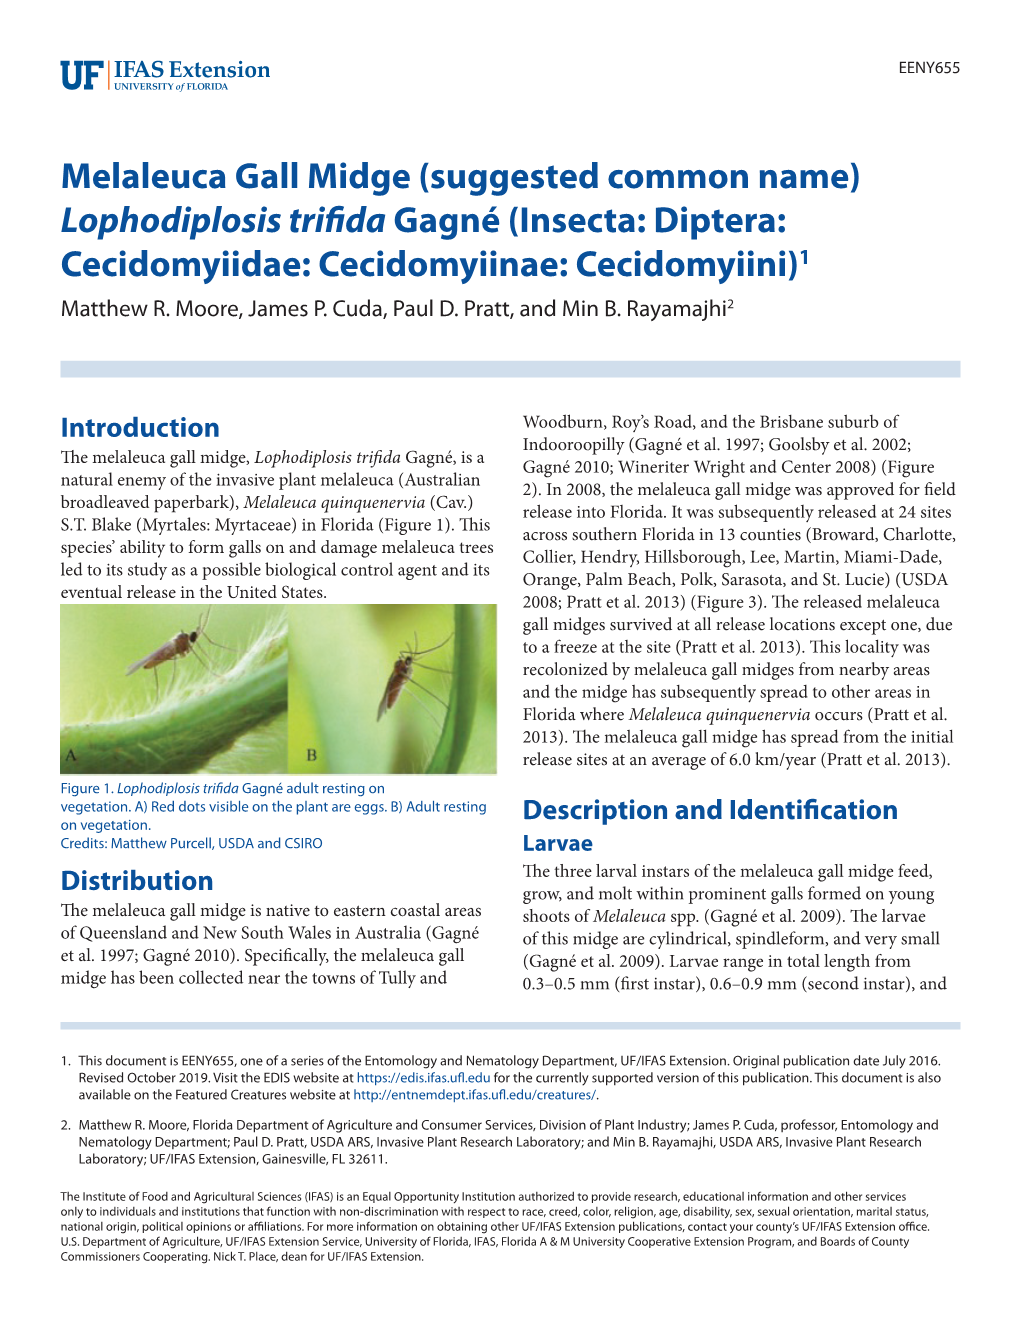 Melaleuca Gall Midge (Suggested Common Name) Lophodiplosis Trifida Gagné (Insecta: Diptera: Cecidomyiidae: Cecidomyiinae: Cecidomyiini)1 Matthew R